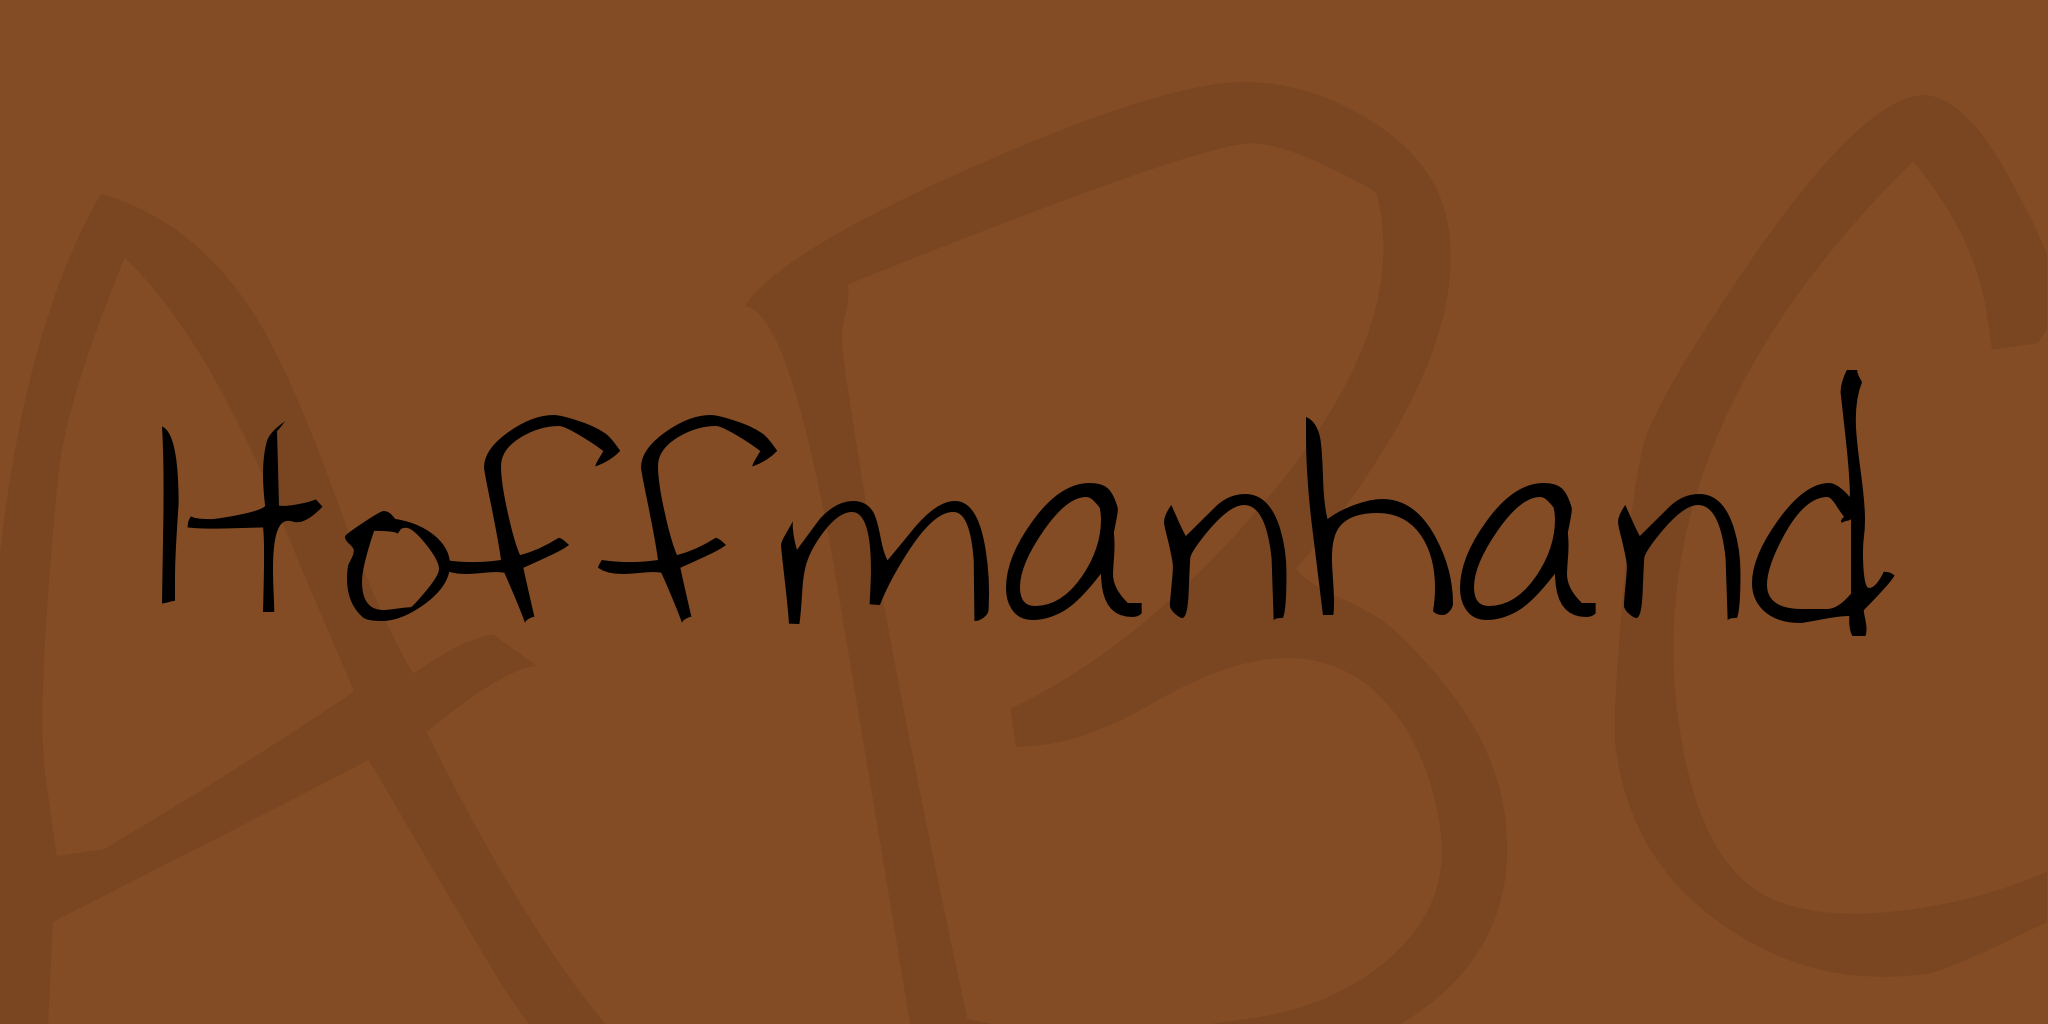 Hoffmanhand